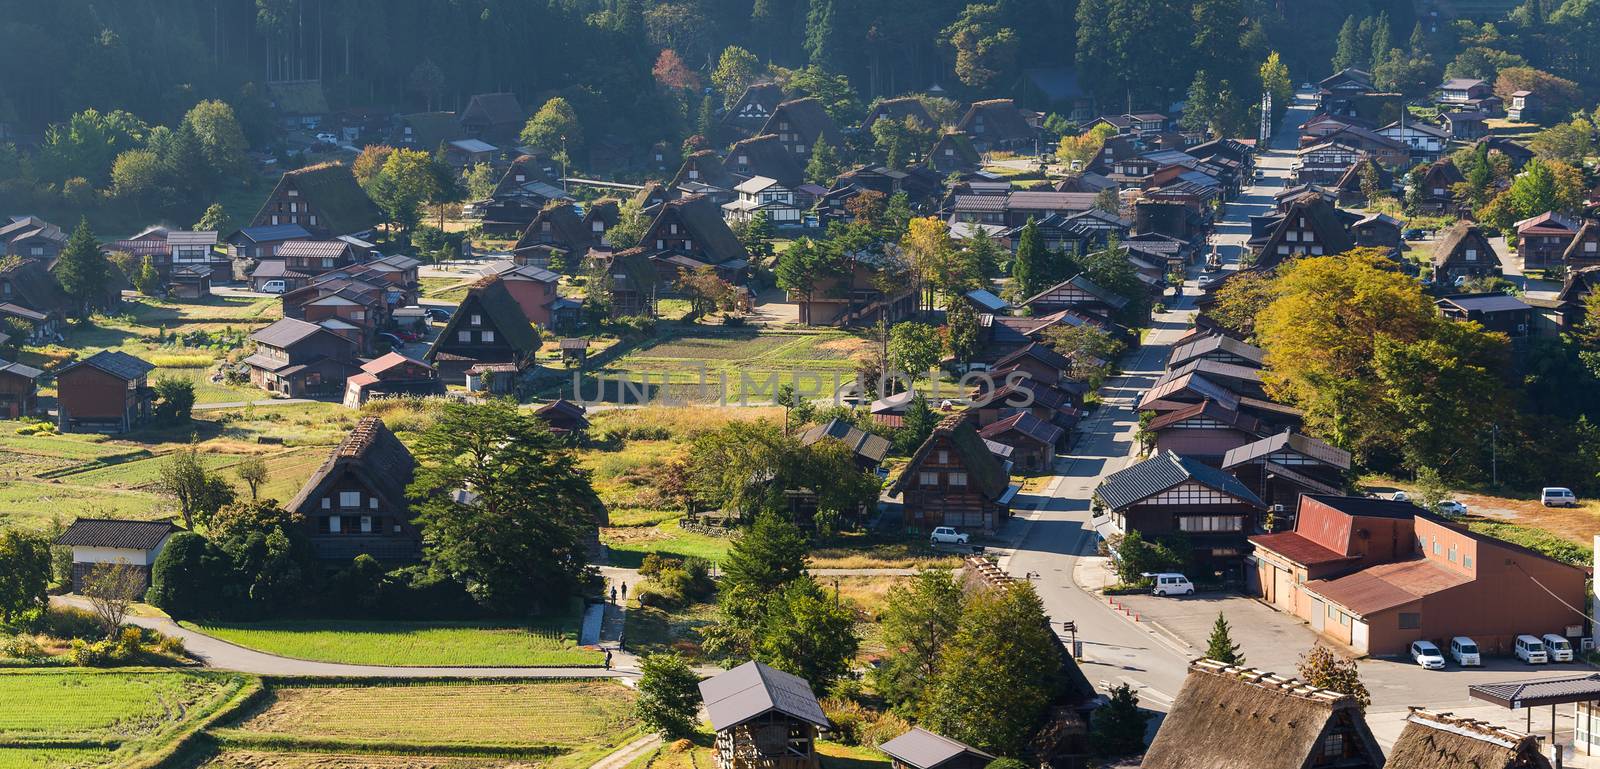 Traditional Shirakawago old village